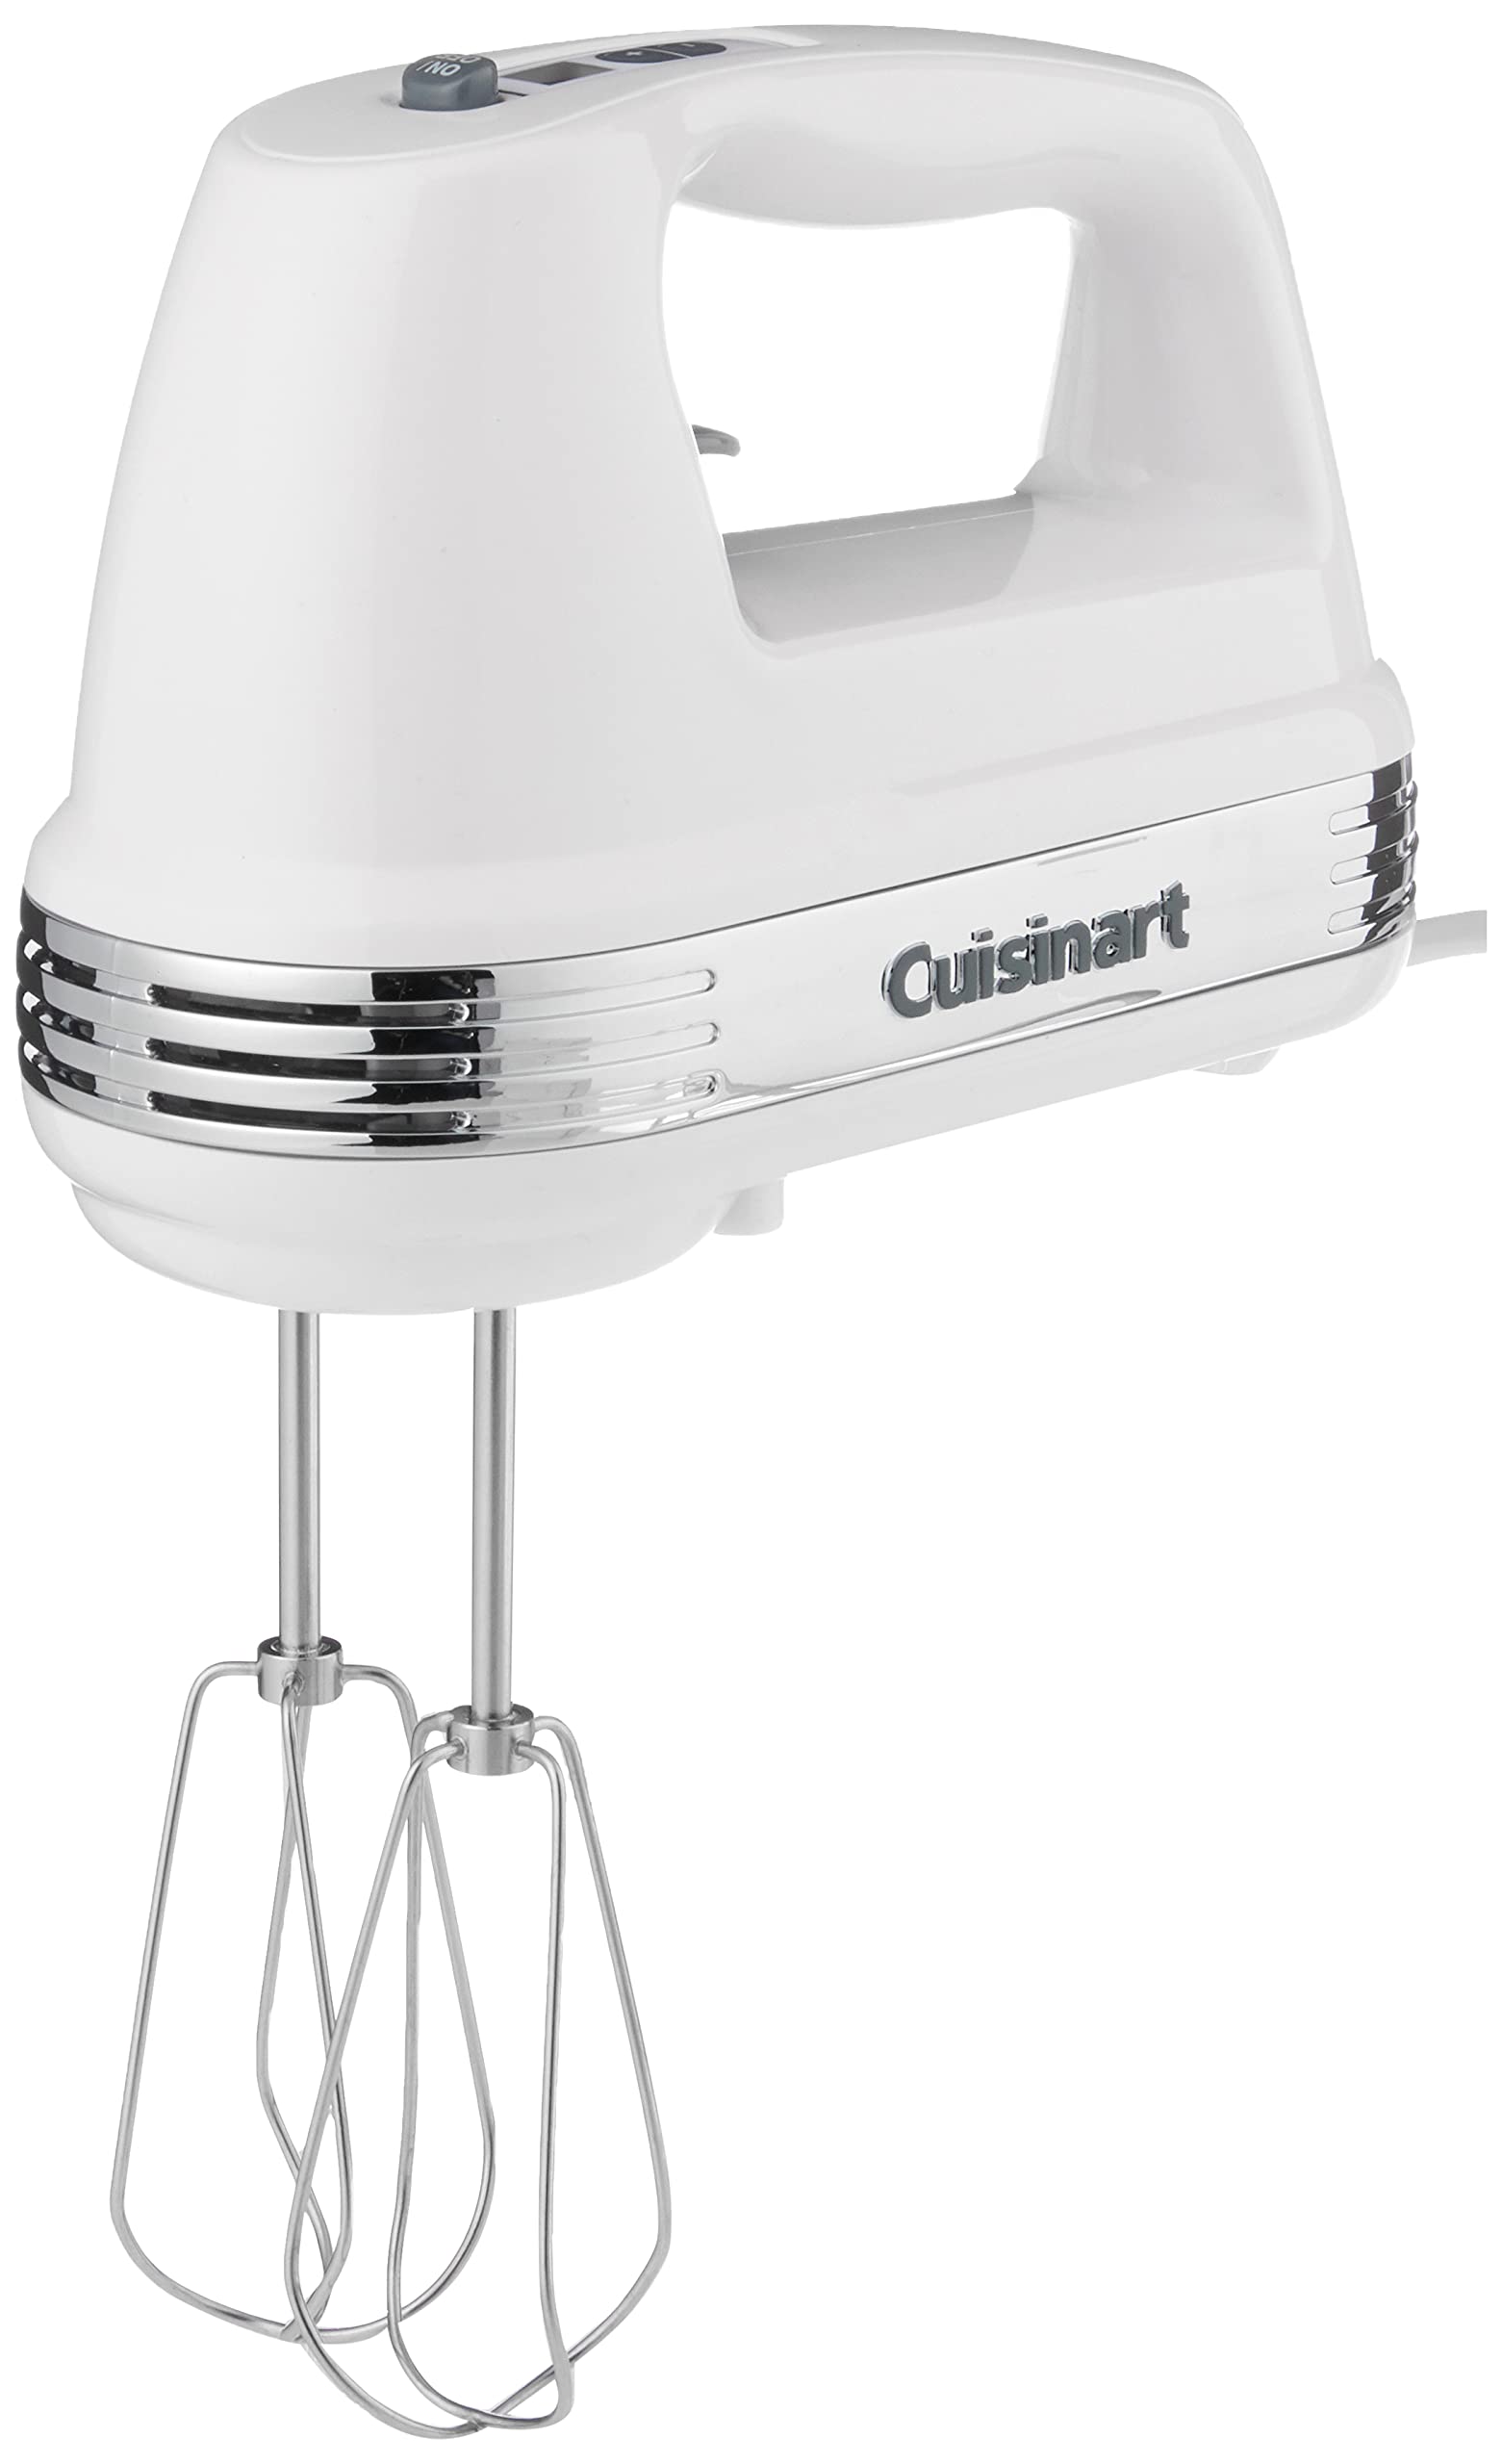 Cuisinart HM-70 Power Advantage 7-Speed Hand Mixer, Silver,White